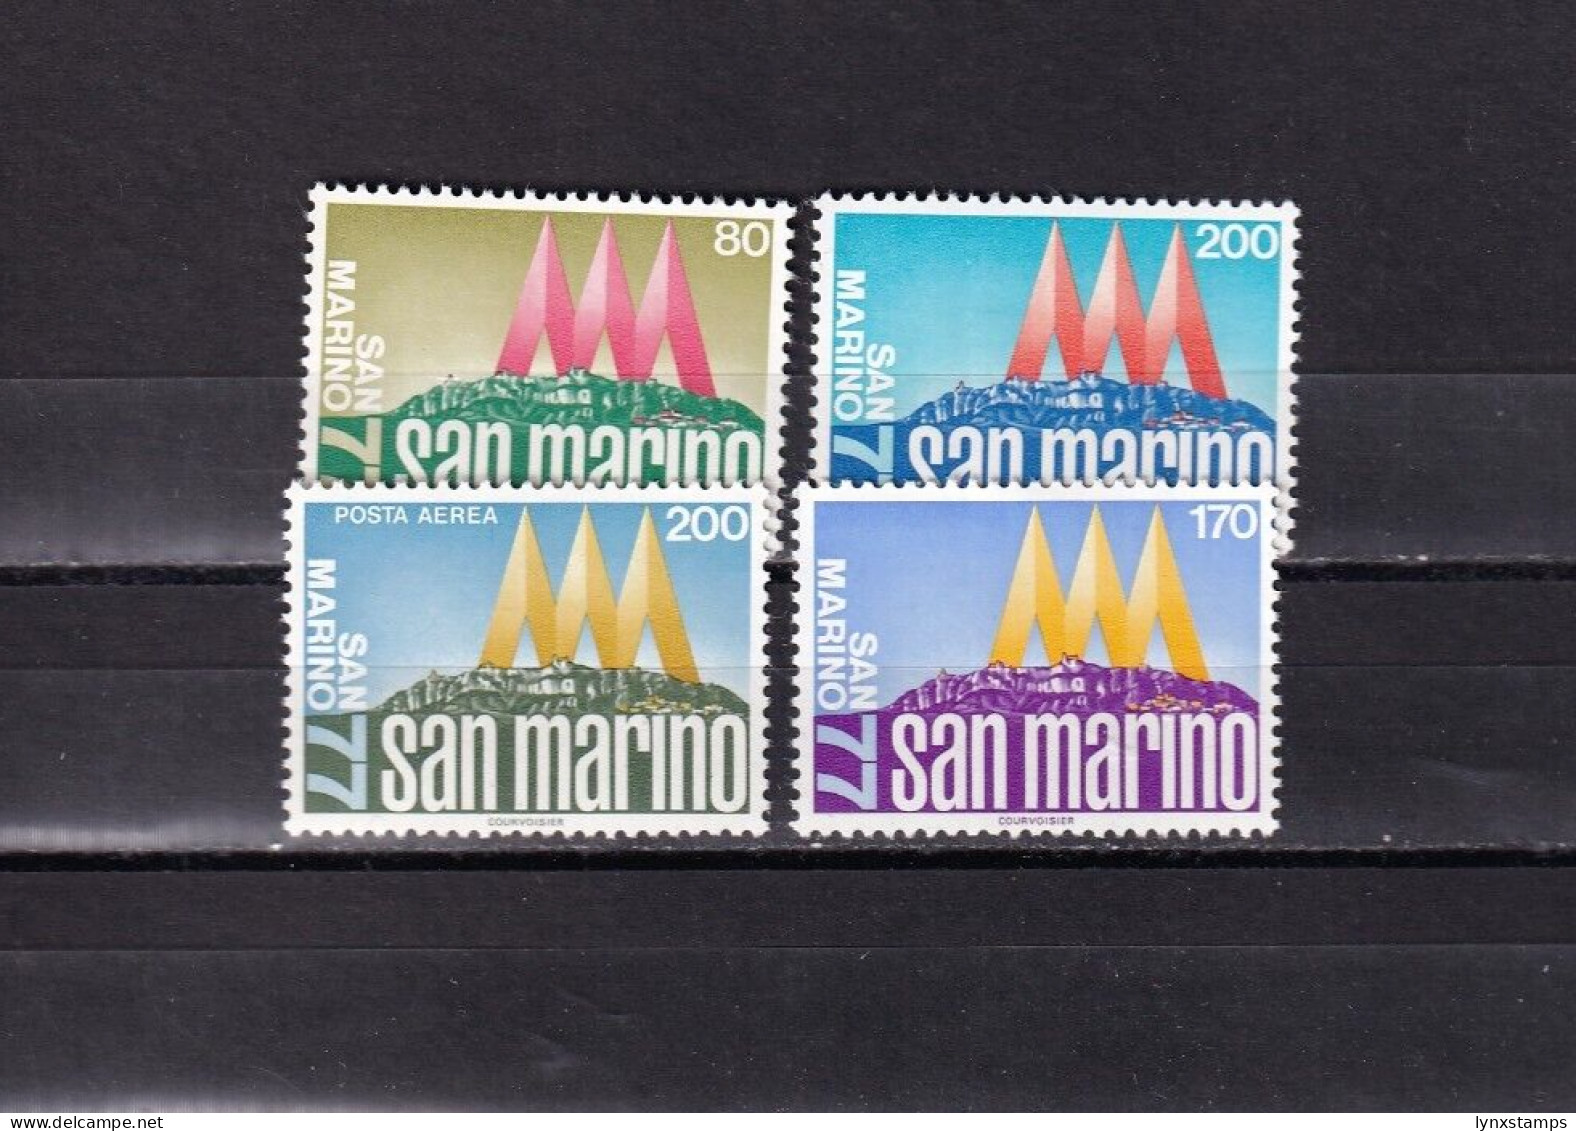 SA04 San Marino 1977 Inter Philatelic Exhibition SAN MARINO '77 Mints Stamps - Ungebraucht